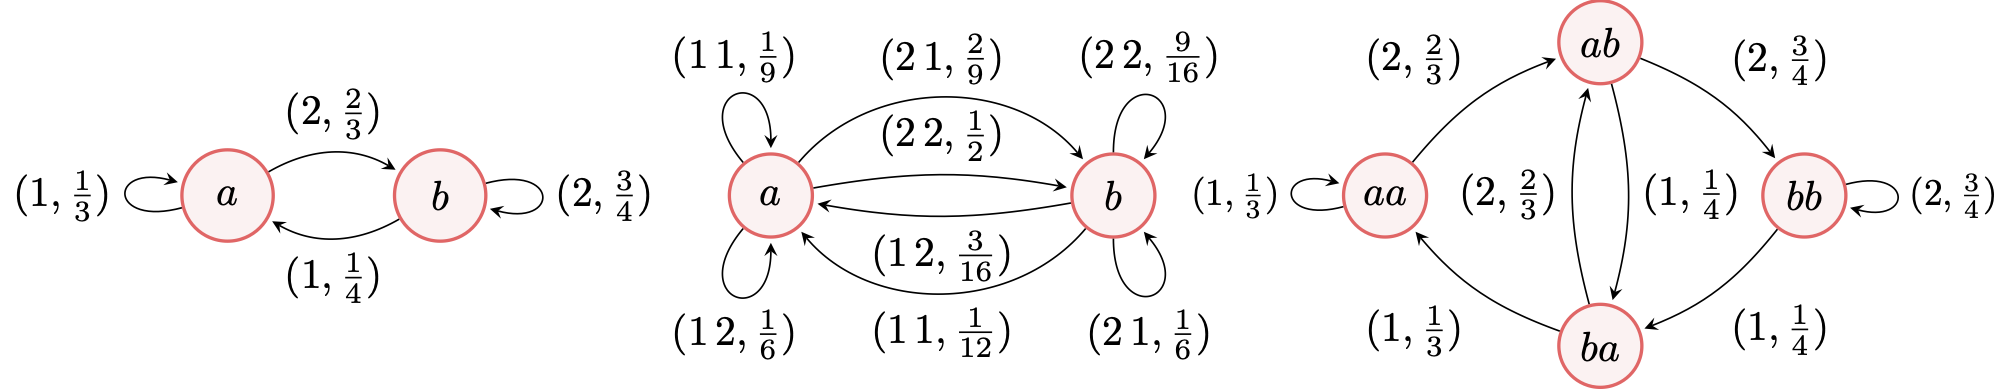 A (probabilistic) path-complete graph